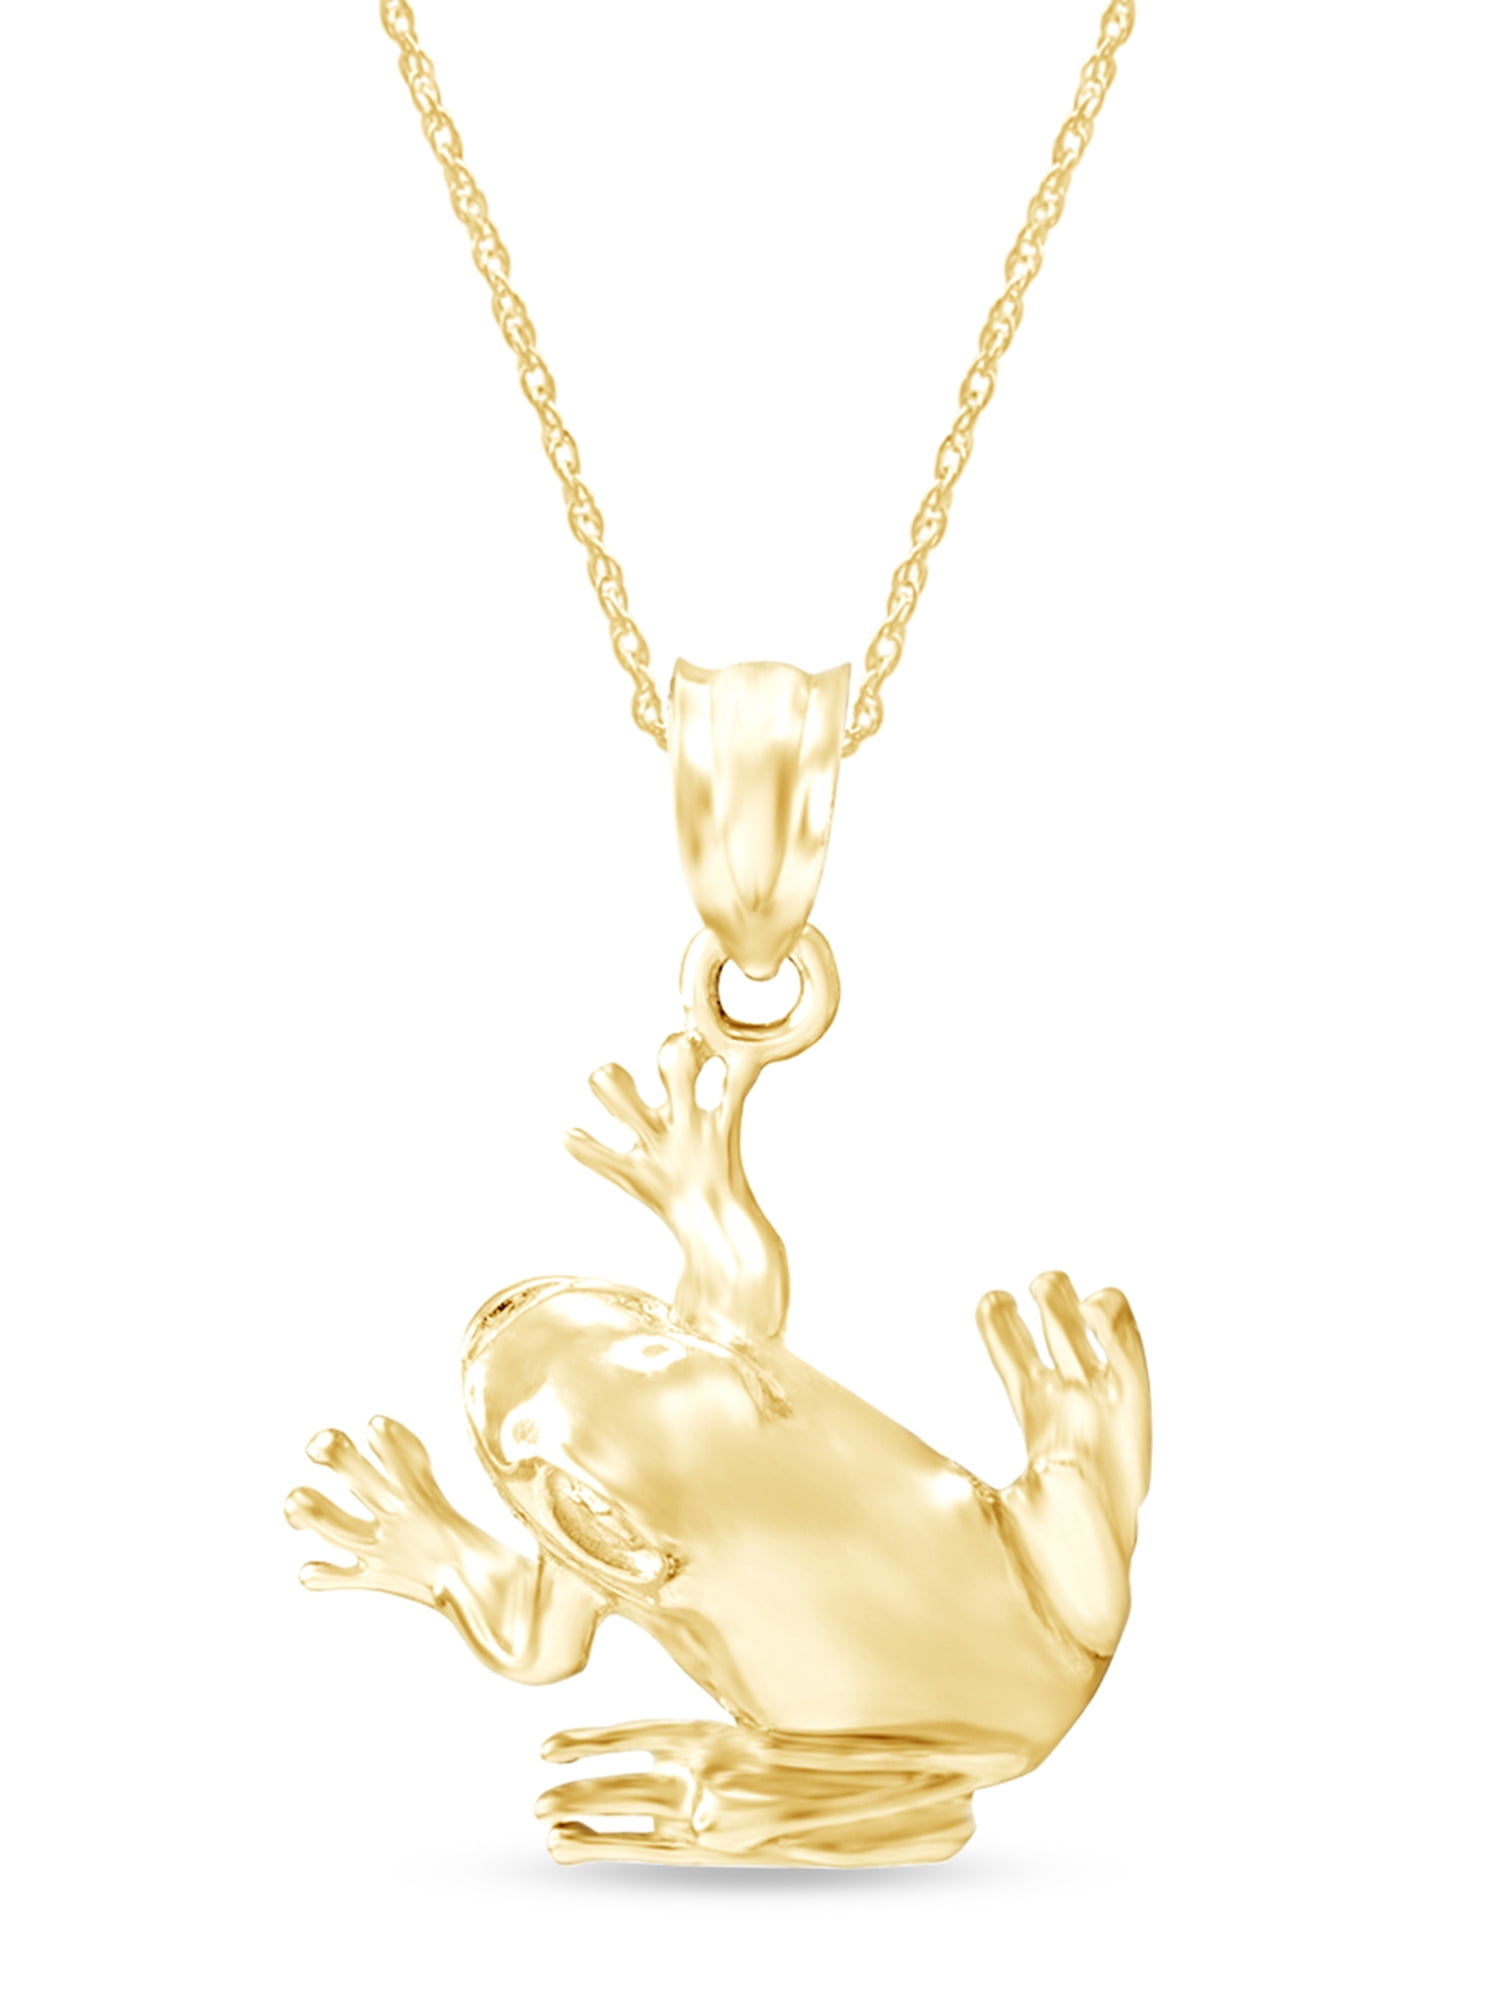 Amazon.com: 14K Yellow Gold Textured Sitting Frog Charm Pendant